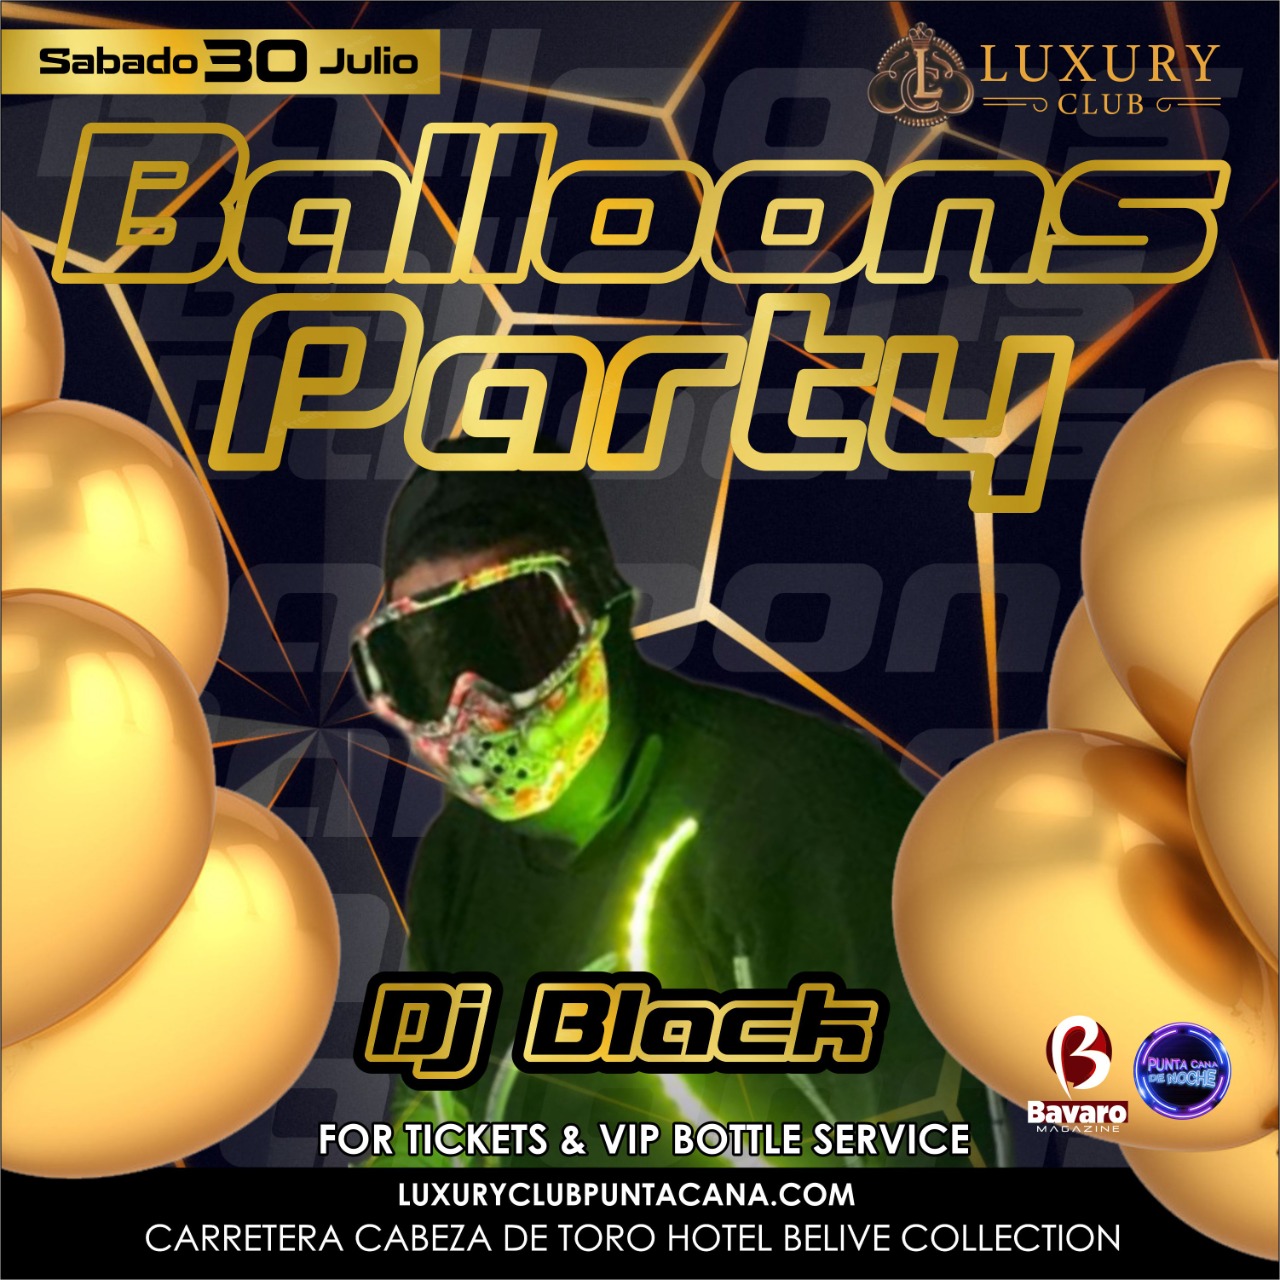 Ballons Party se prende hoy 30 de julio en Luxury Club Punta Cana